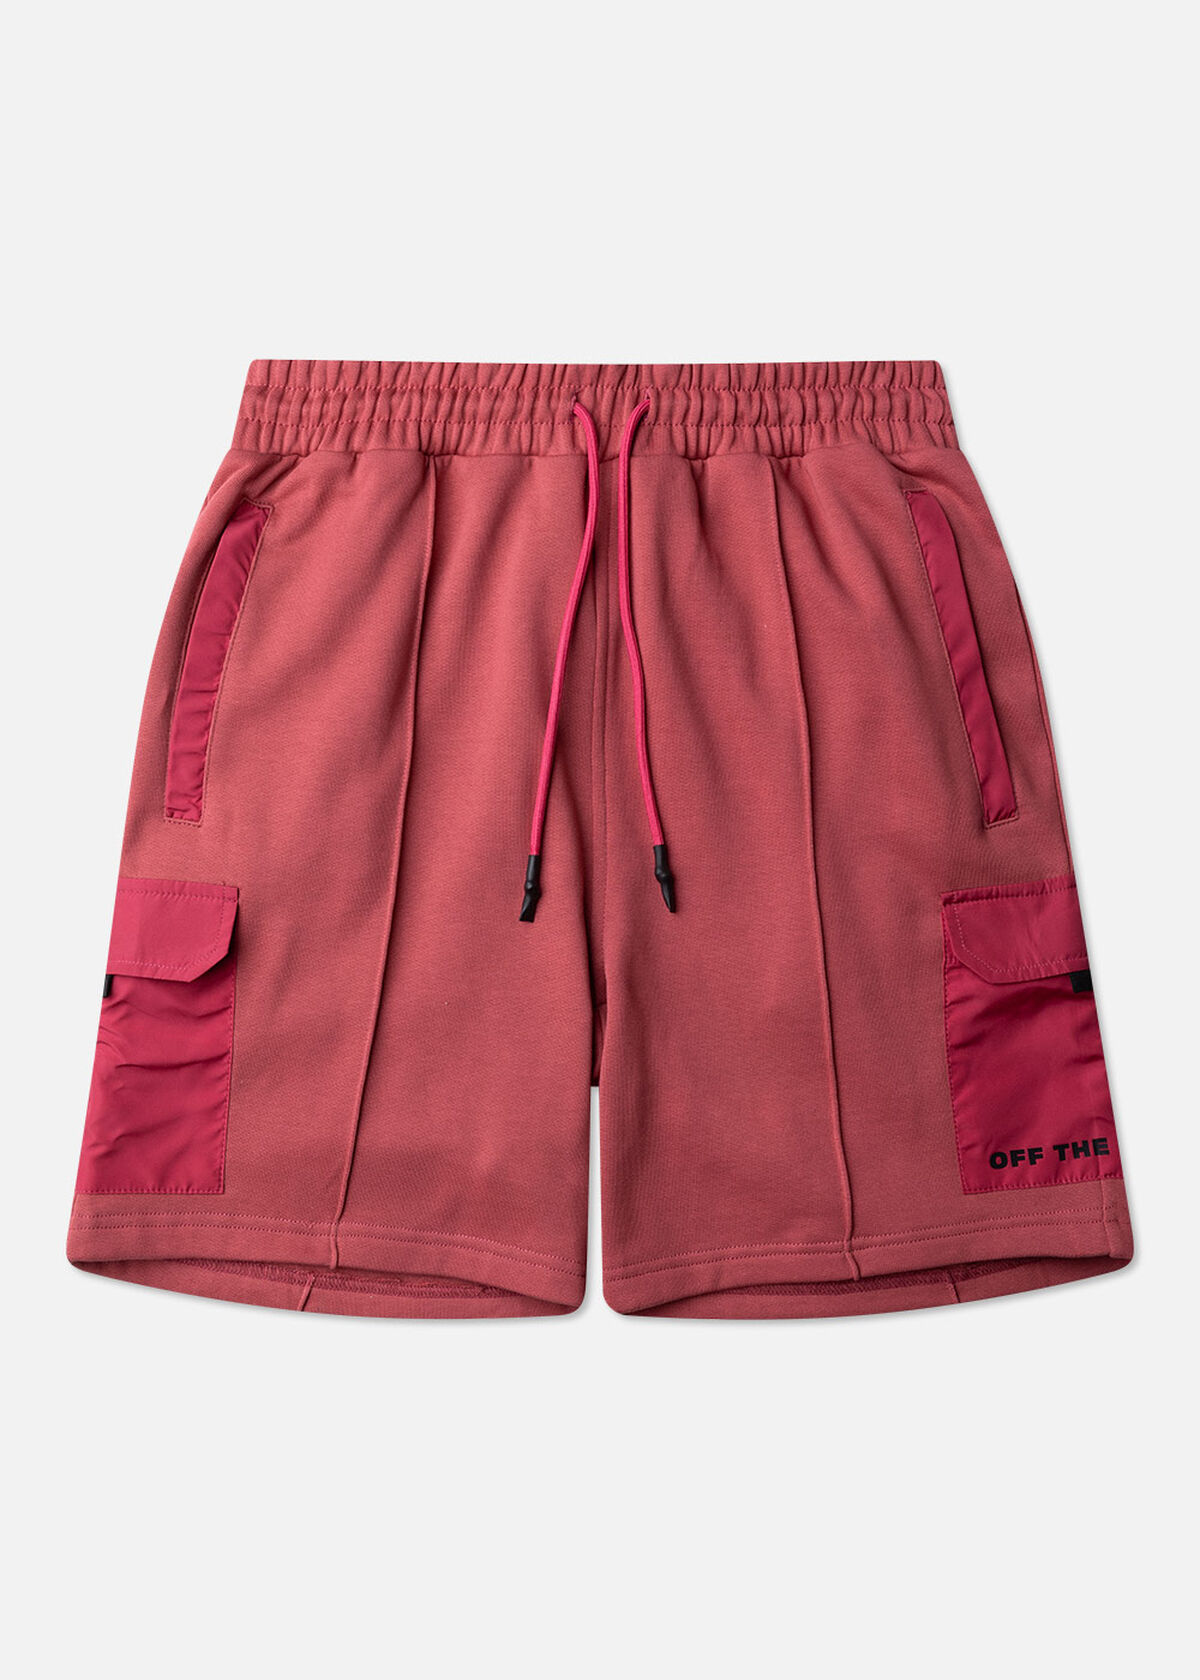 Marine Cargo Shorts, Pink/Brown, hi-res